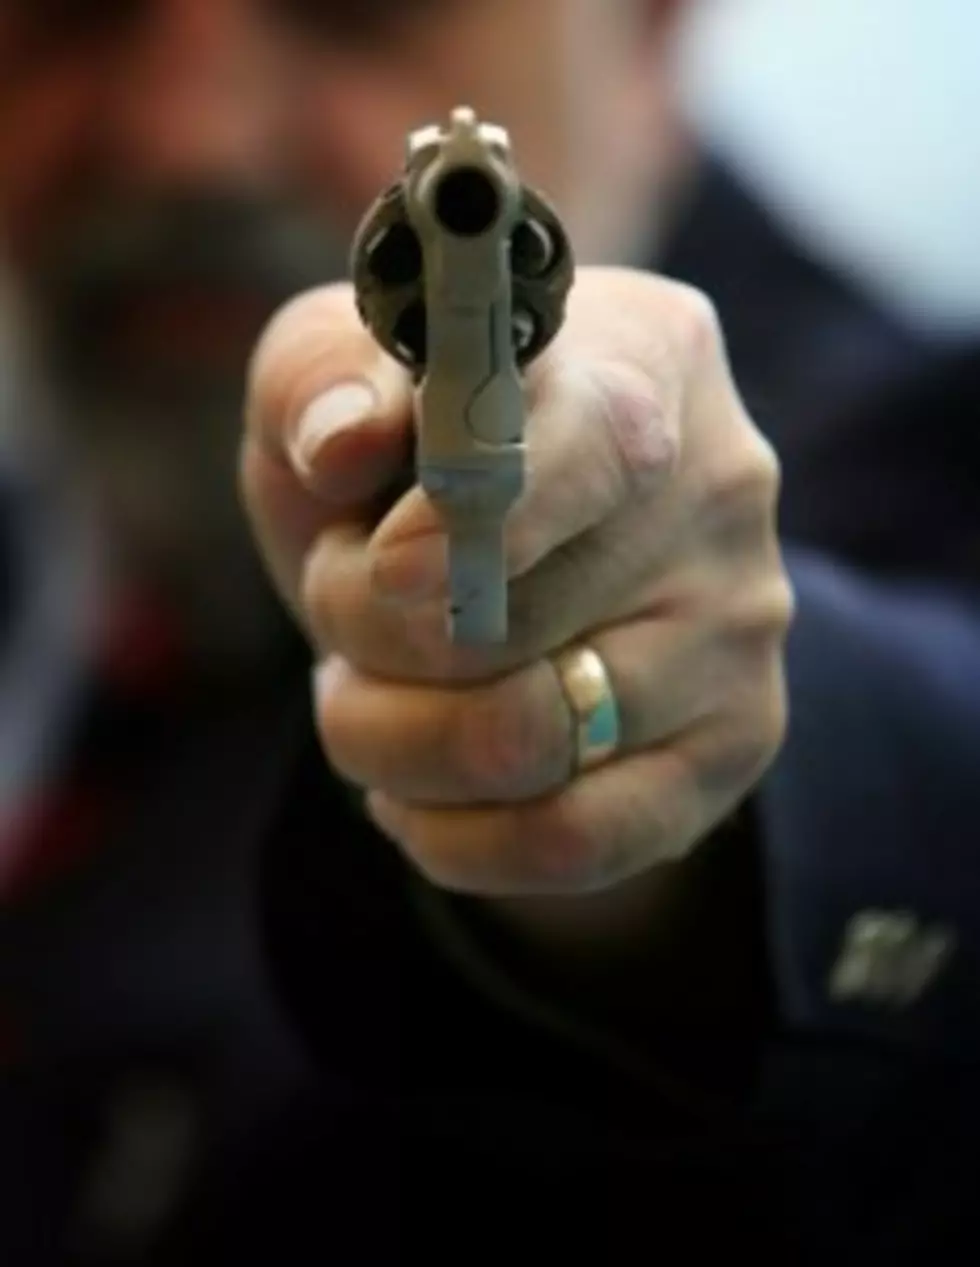 Michigan Boy Gets Probation for Bringing Gun to School